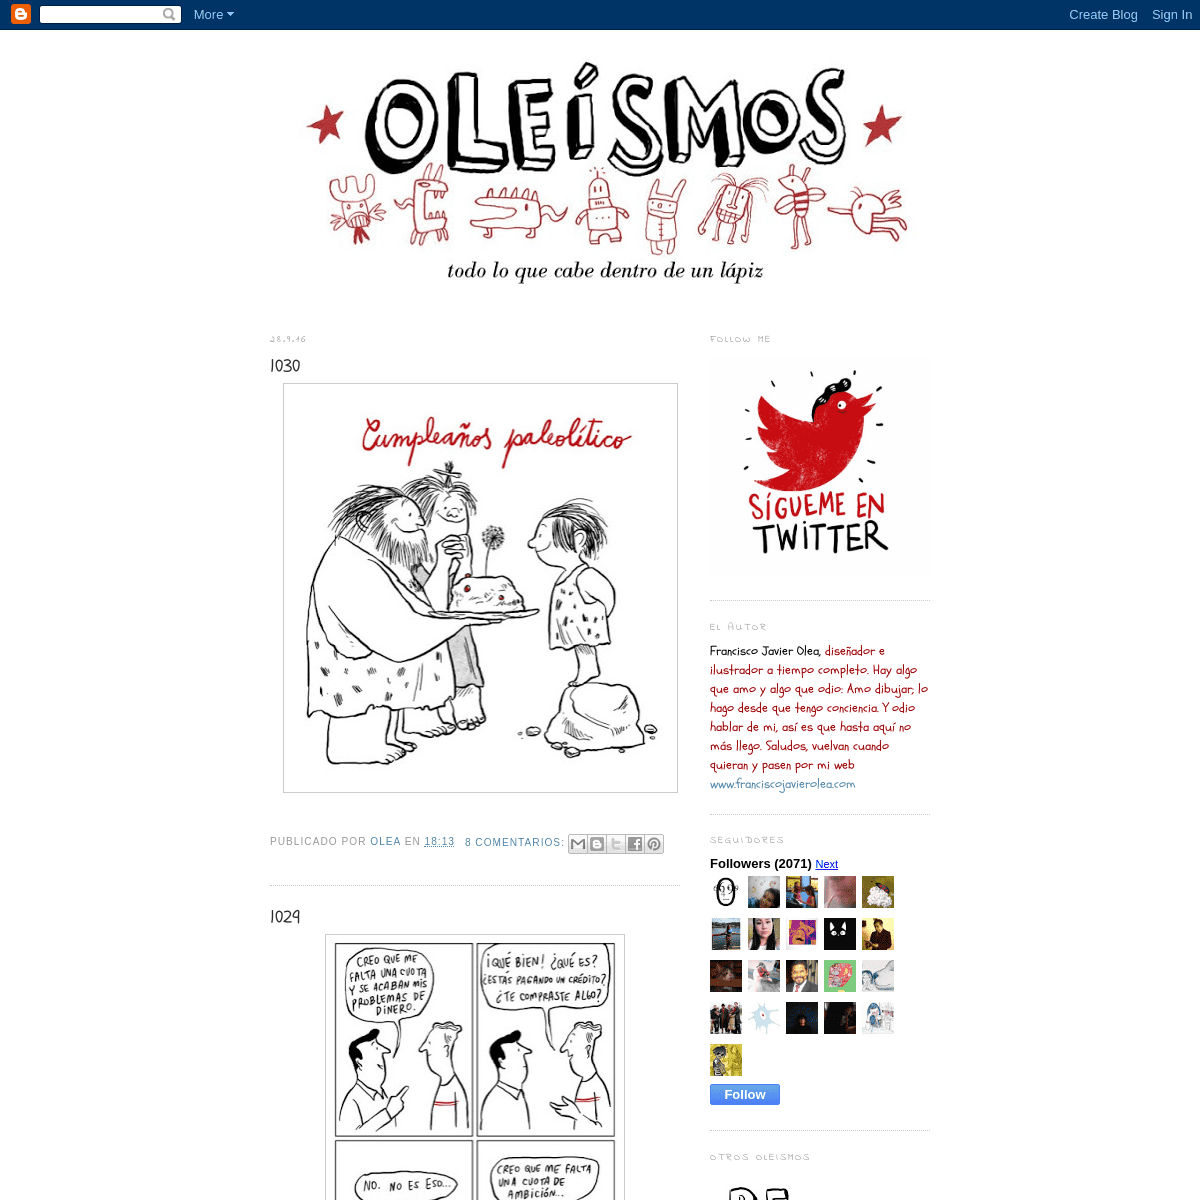 A complete backup of oleismos.blogspot.com